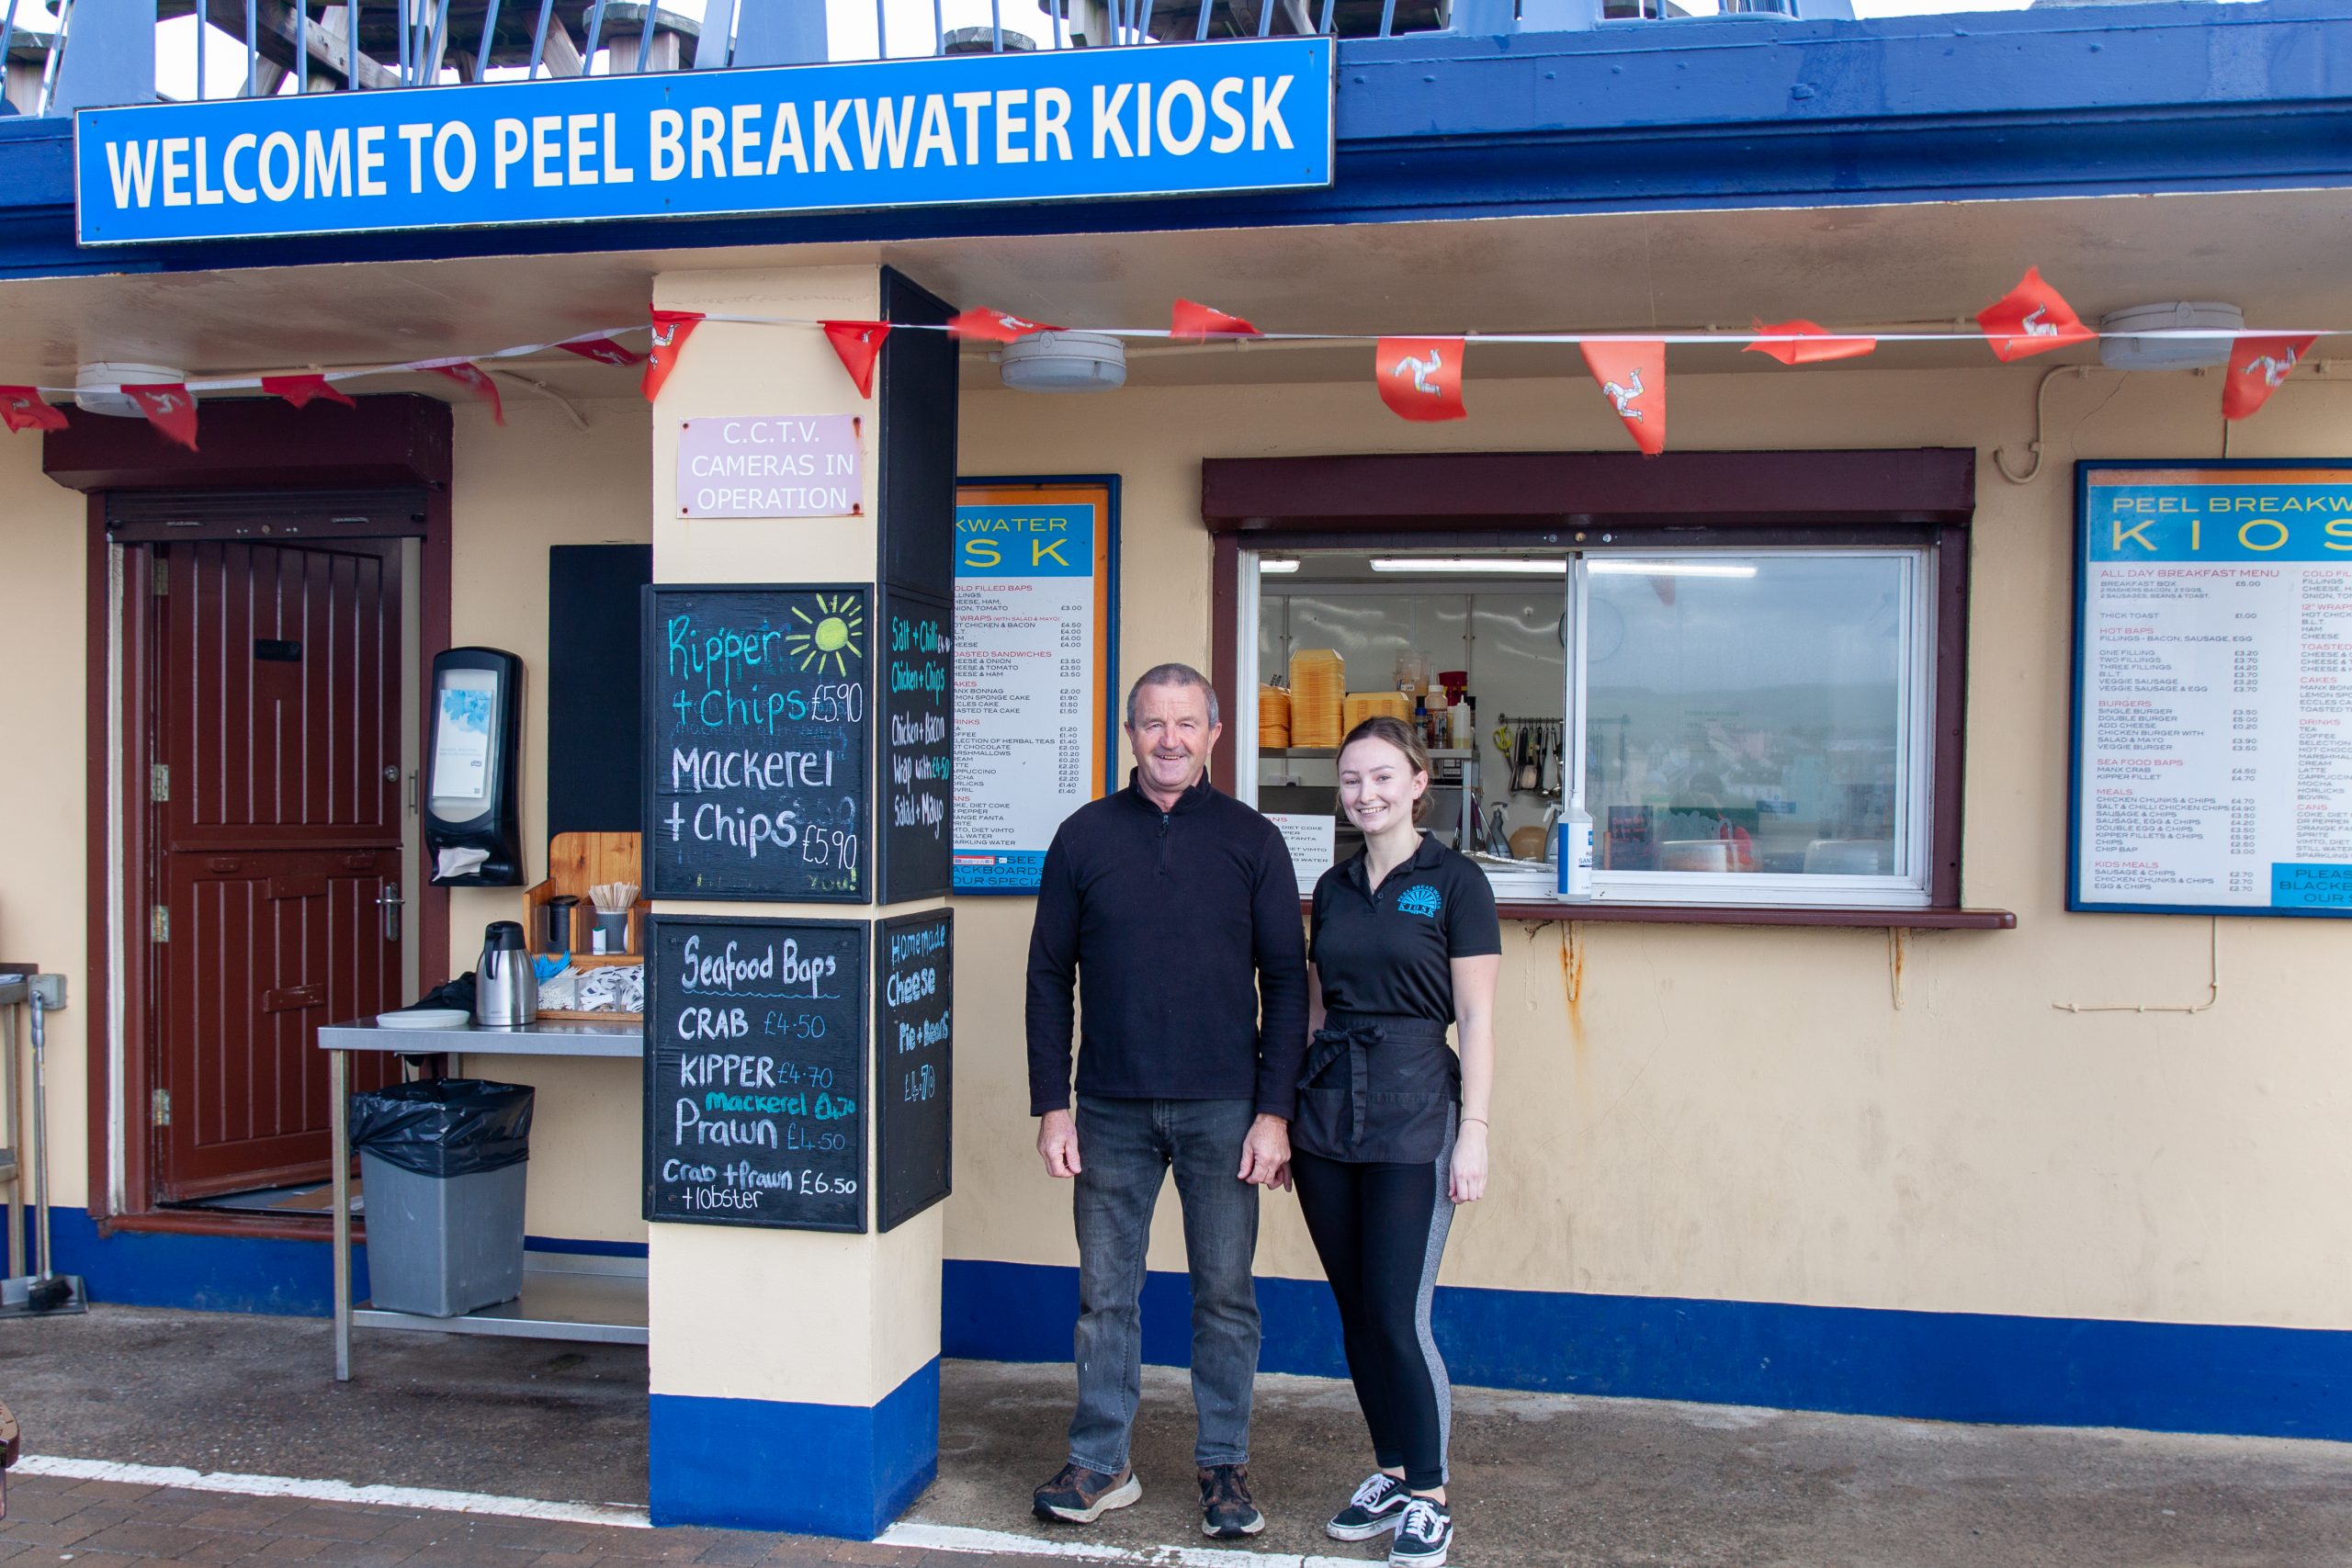 Peel Breakwater Kiosk